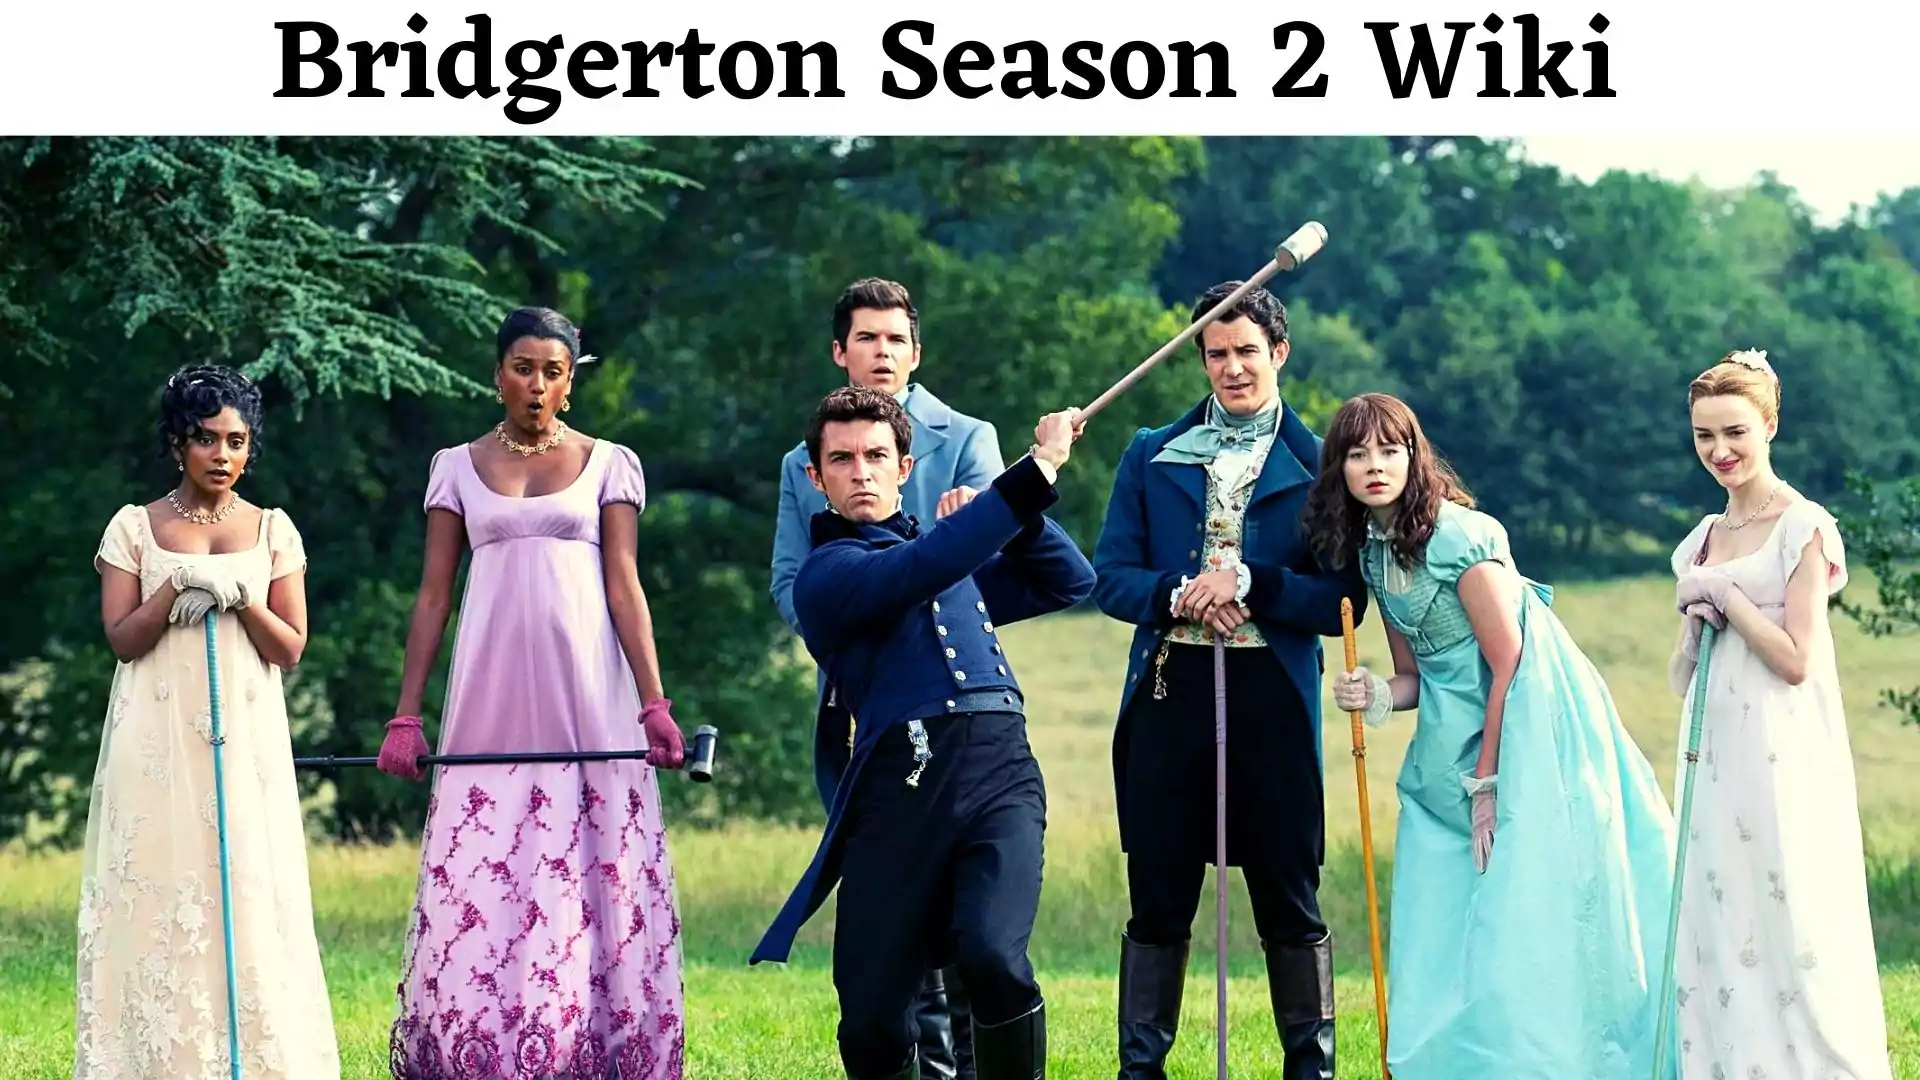 Bridgerton Season 2 Wiki Wallpaper and images